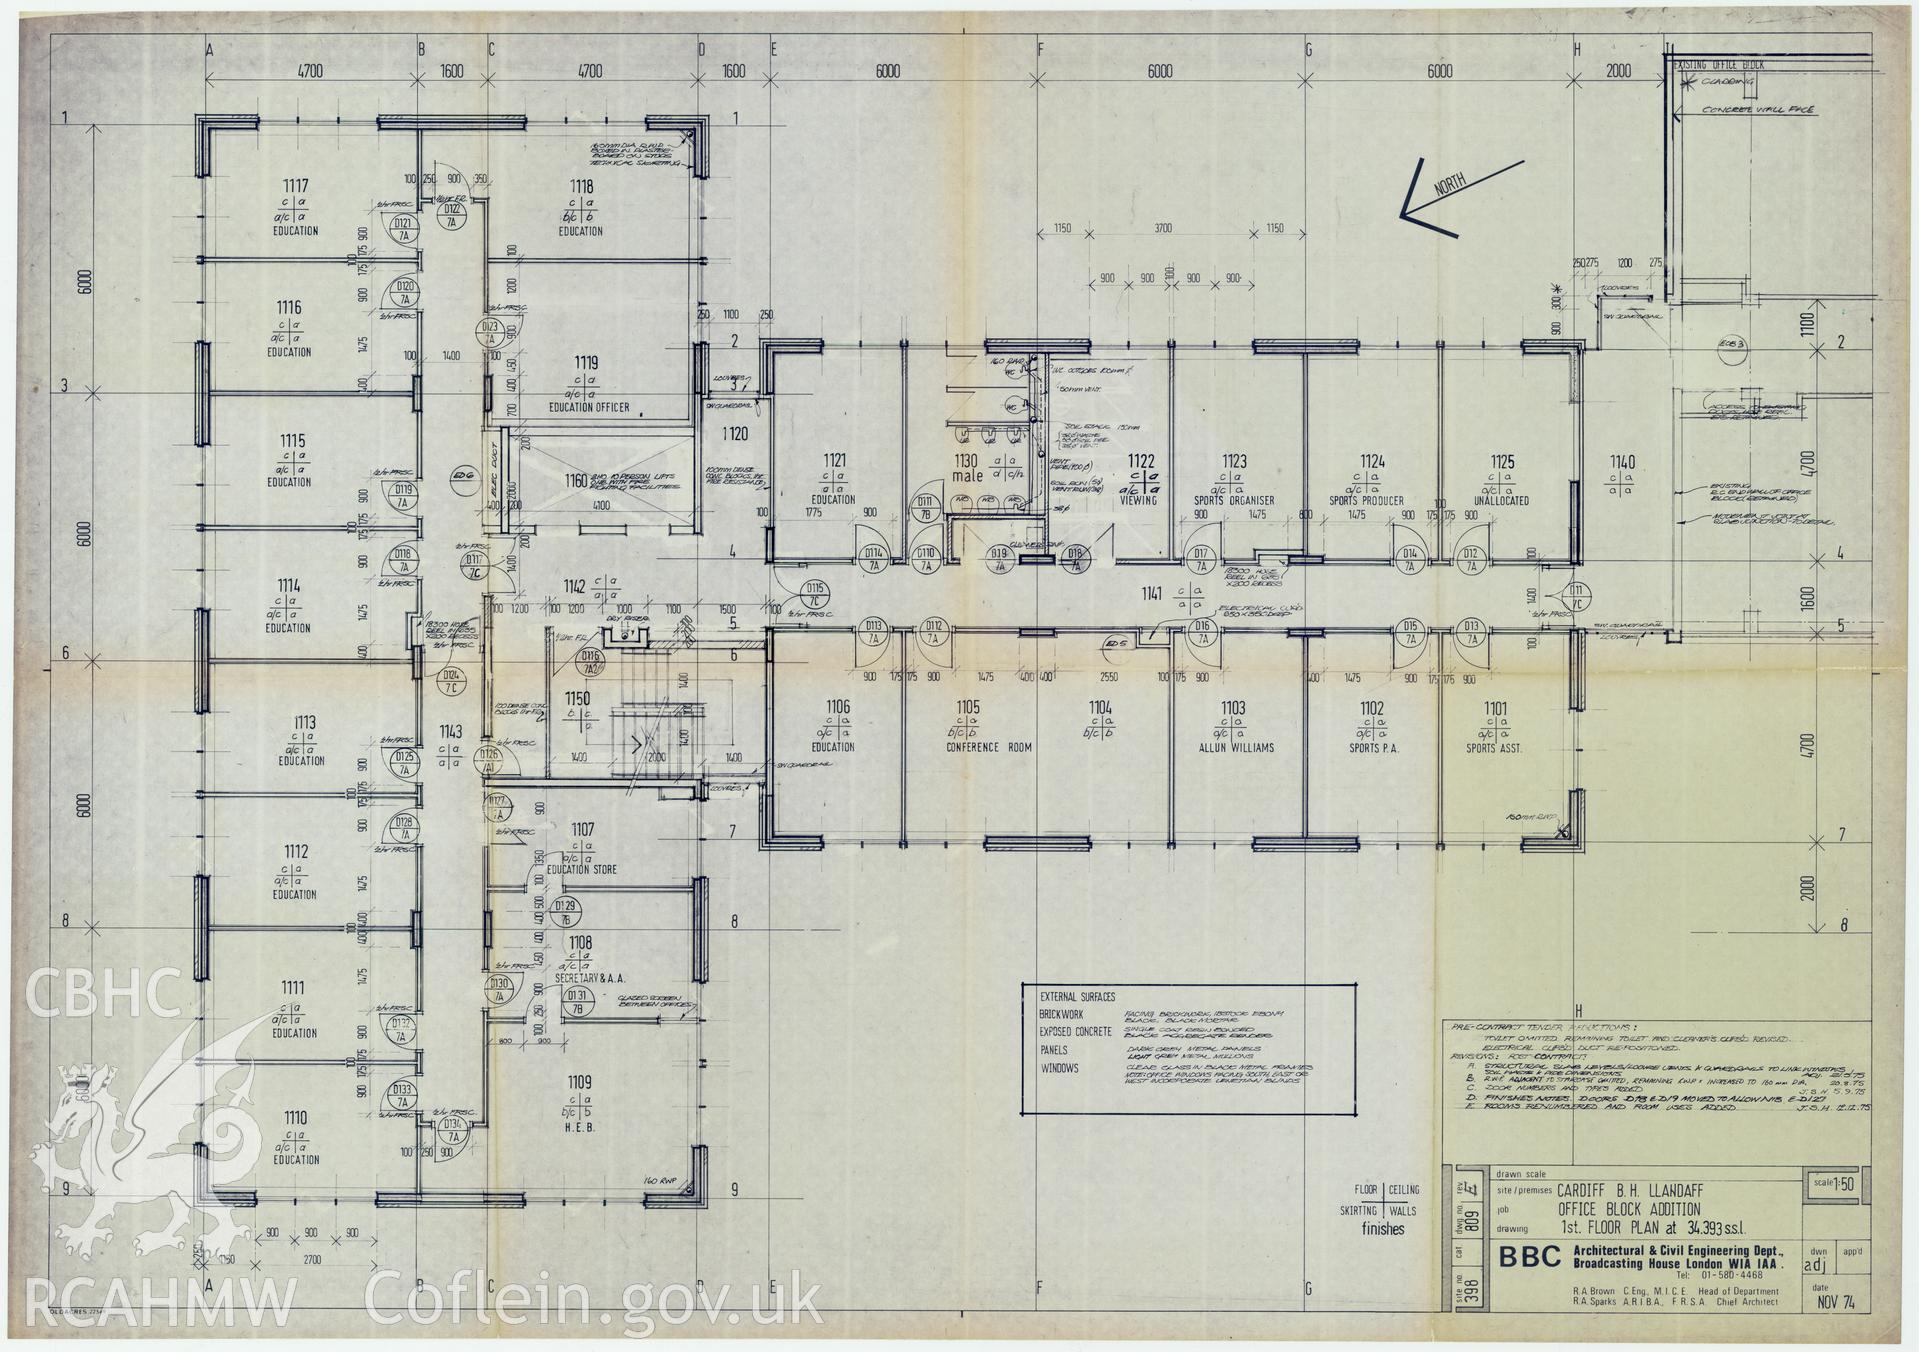 Digitised drawing plan of Llandaff office block addition, Cardiff. First floor plan no. 809E, November 1974.